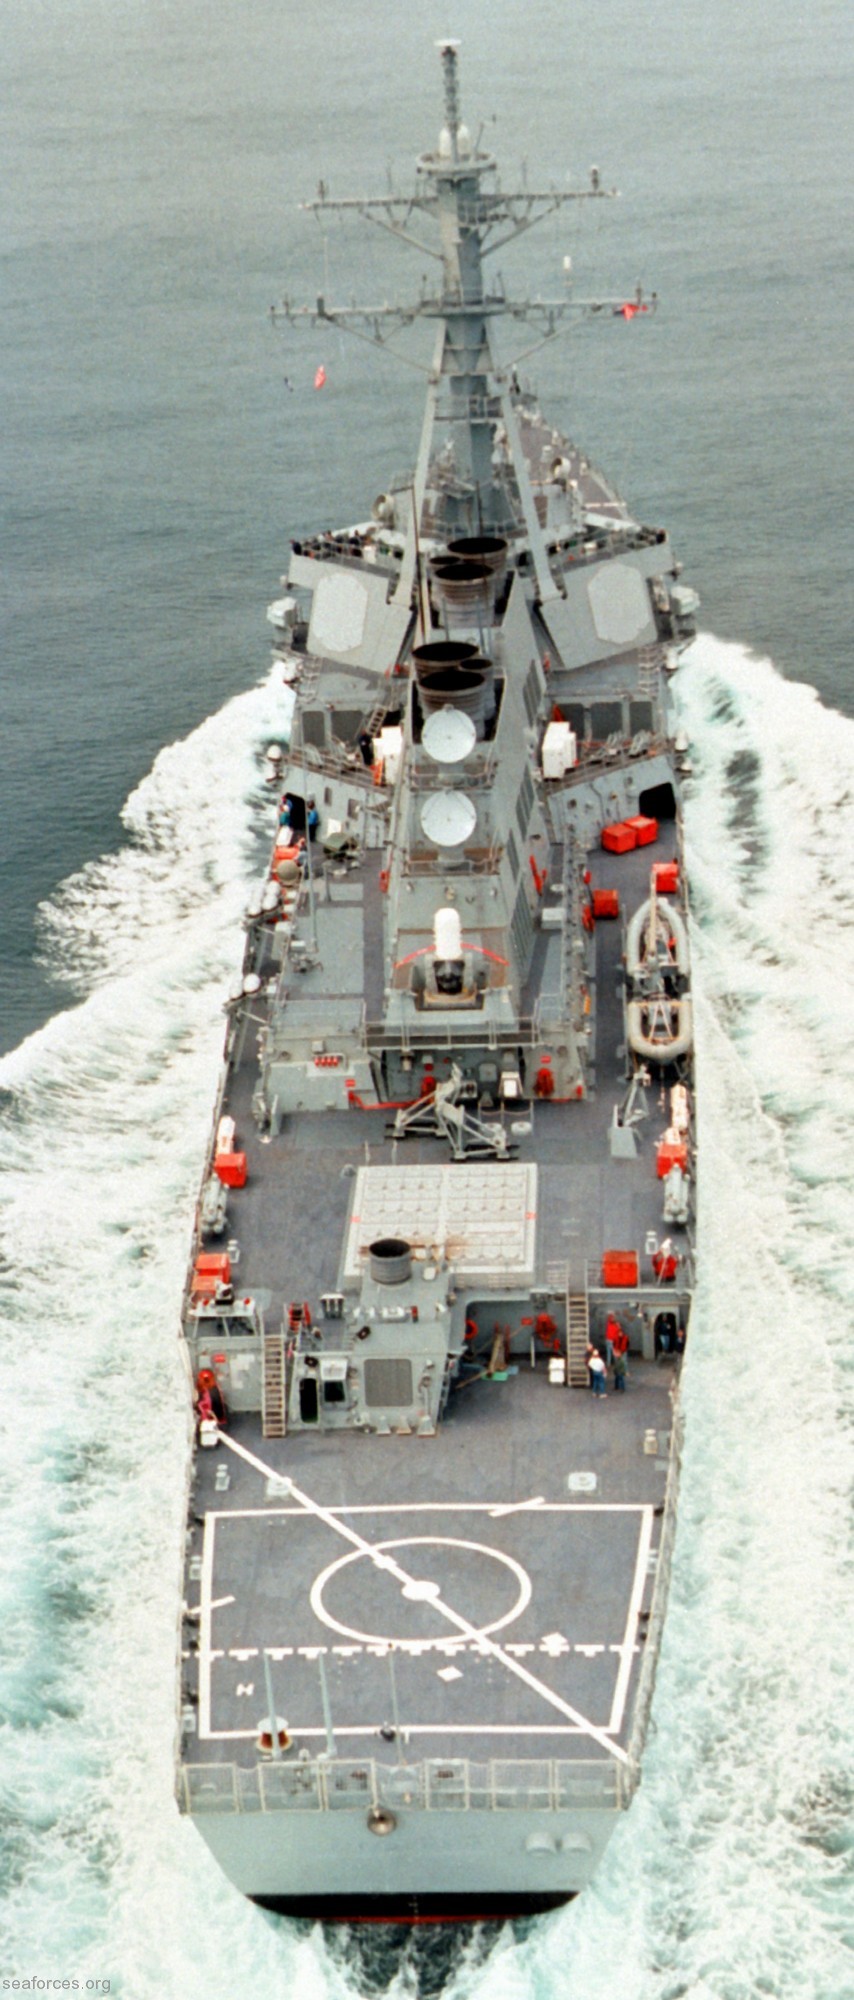 ddg-62 uss fitzgerald guided missile destroyer 1995 118 sea trials bath iron works maine